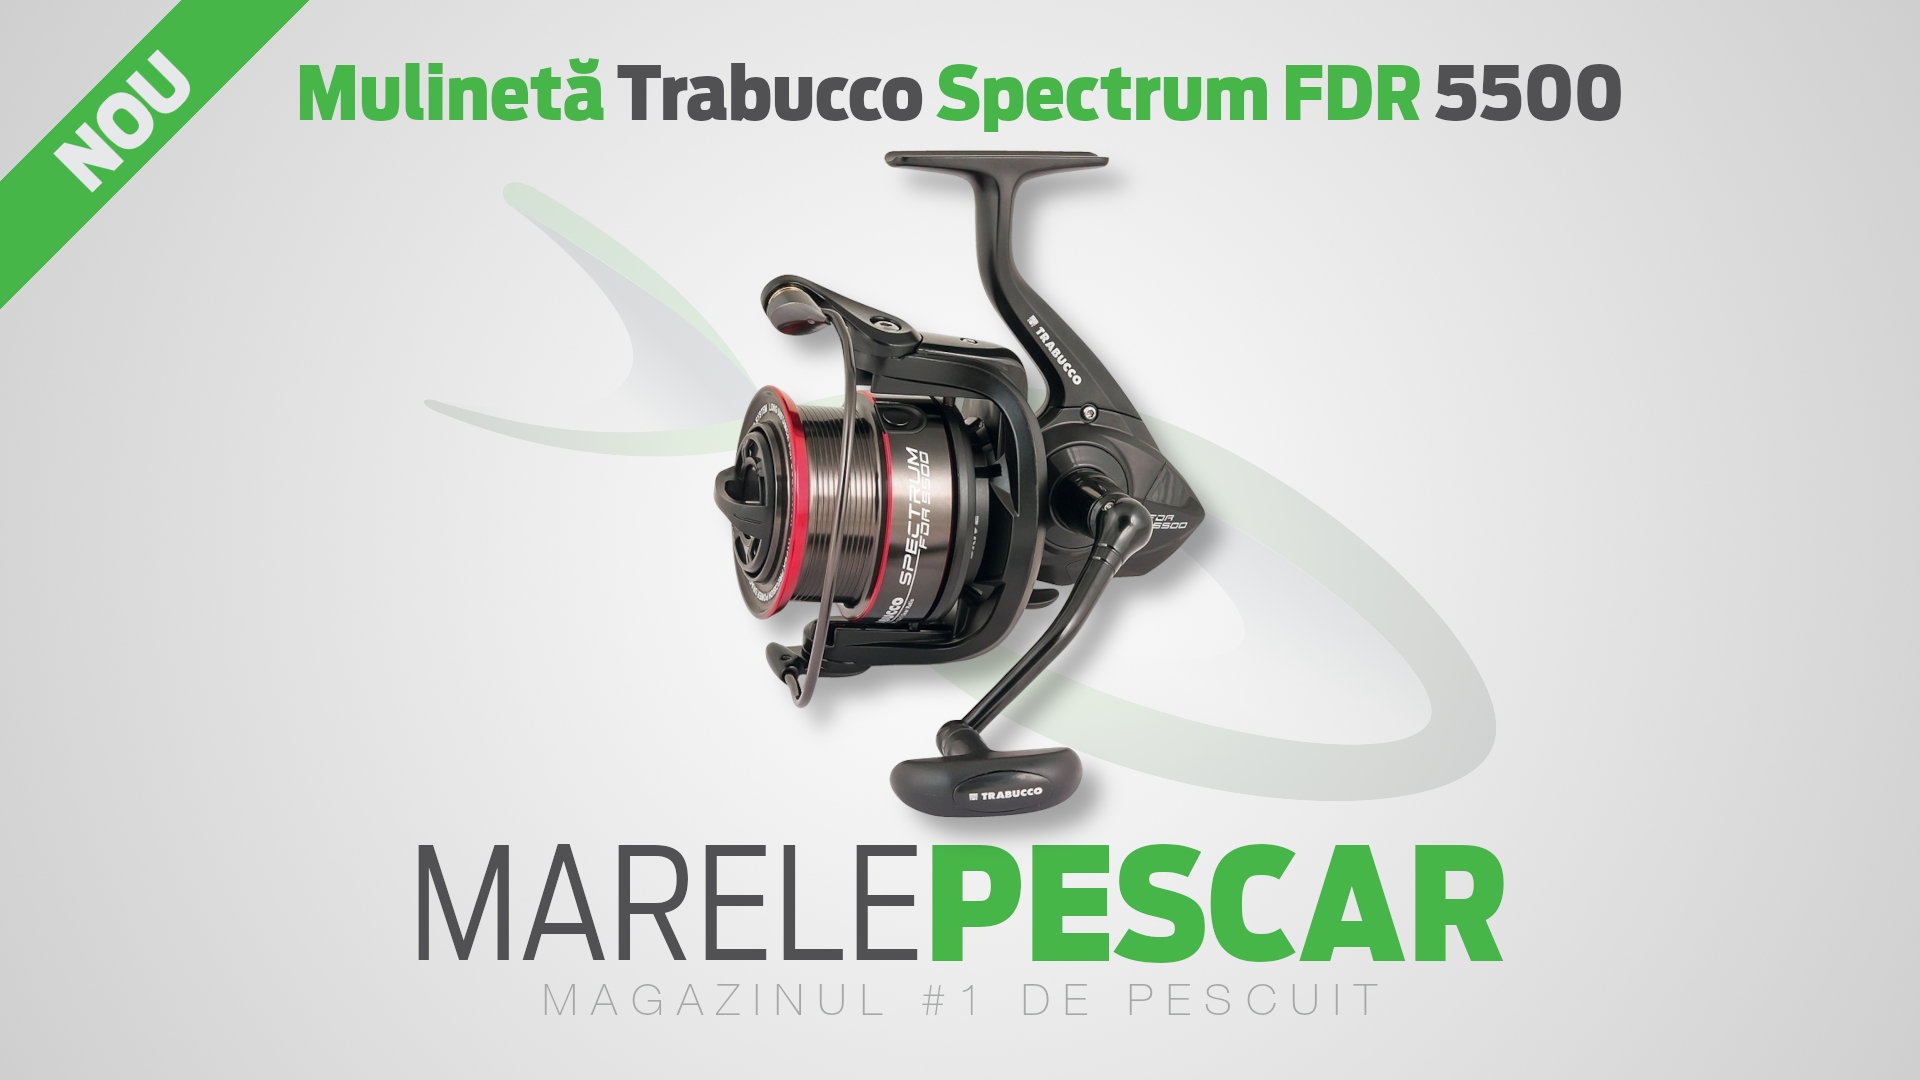 Mulineta Trabucco Spectrum FDR 5500